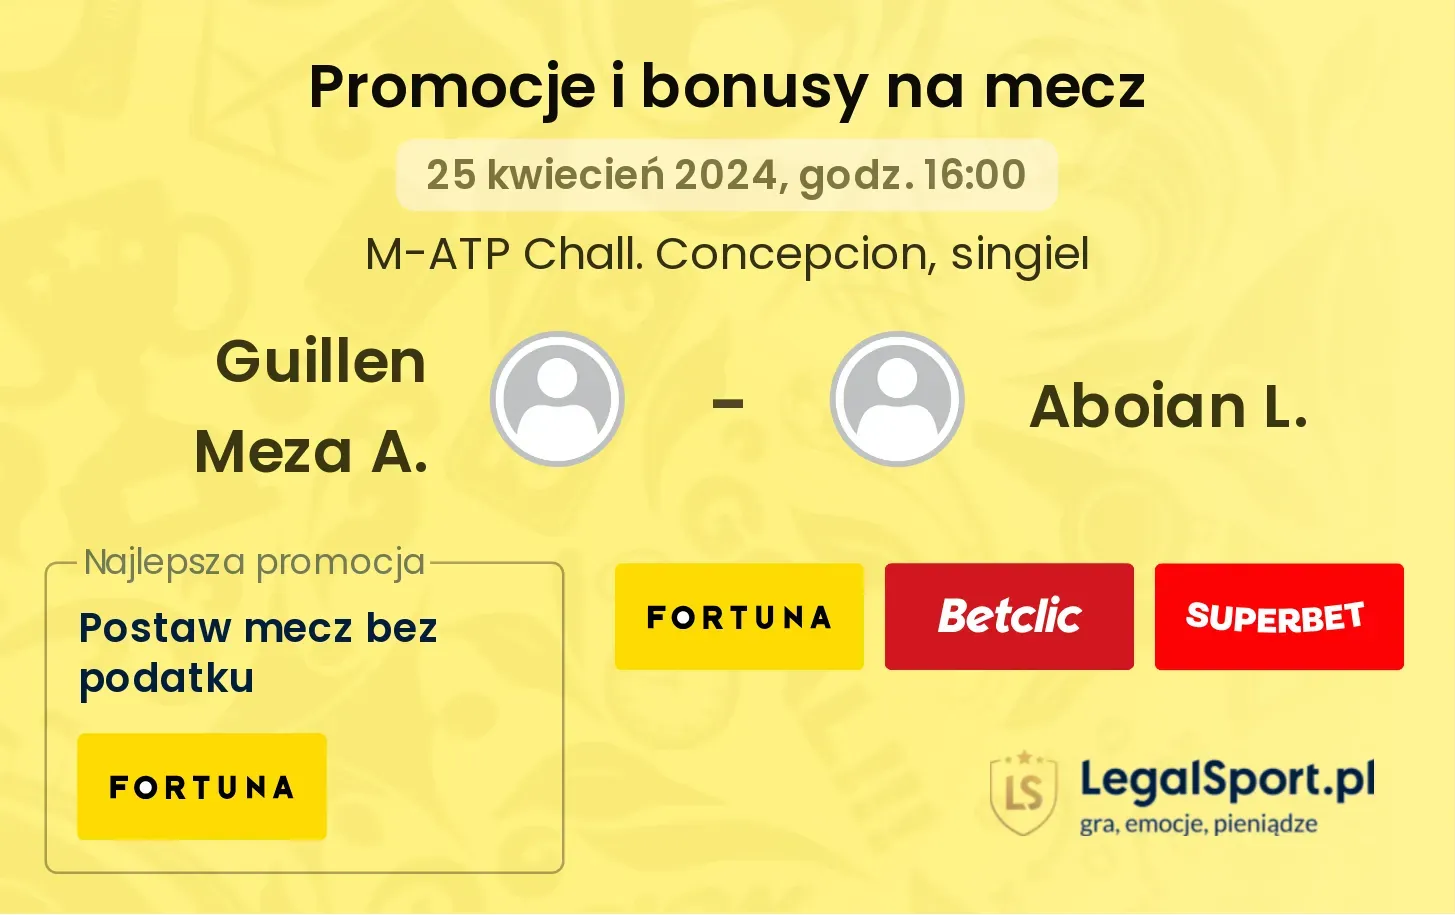 Guillen Meza A. - Aboian L. promocje bonusy na mecz